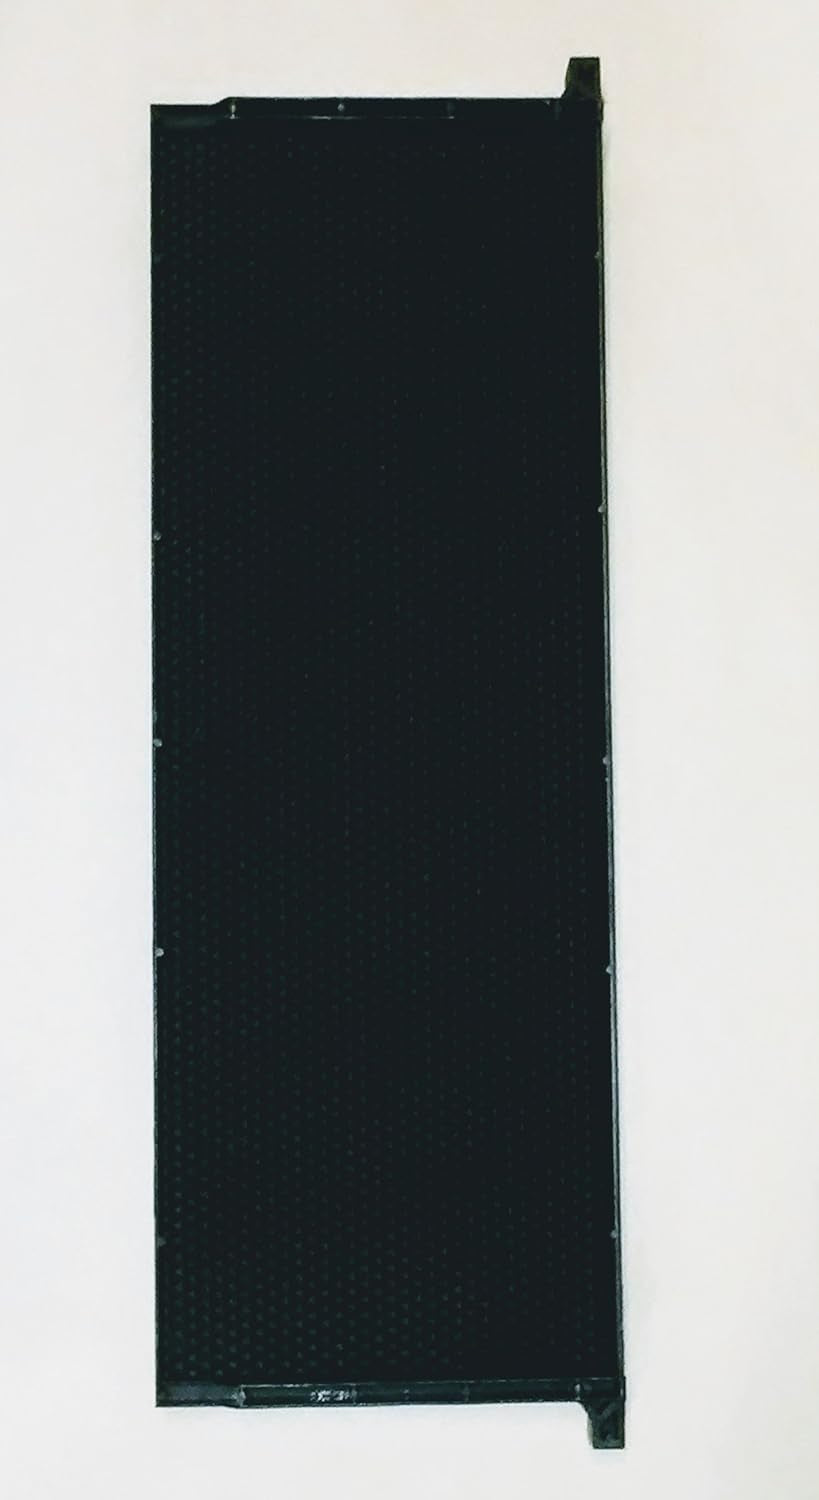 Medium Plastic Frame 10 Pack (Black)